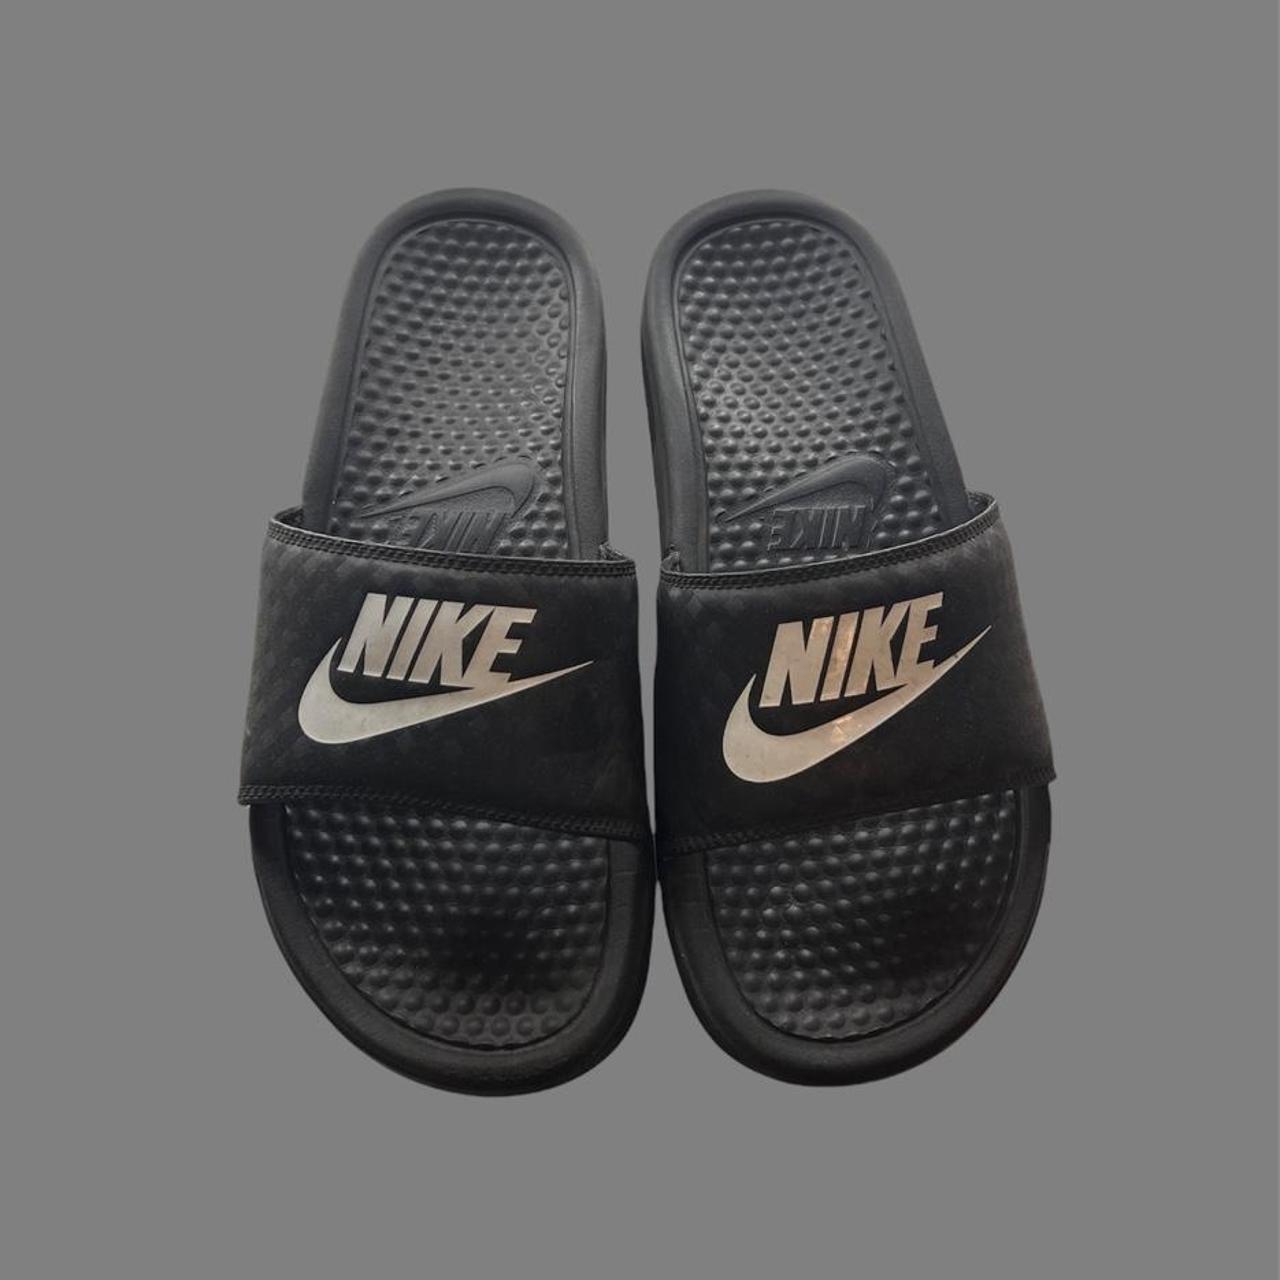 Norteamérica Soldado Perspicaz Nike Women's Black and White Slides | Depop